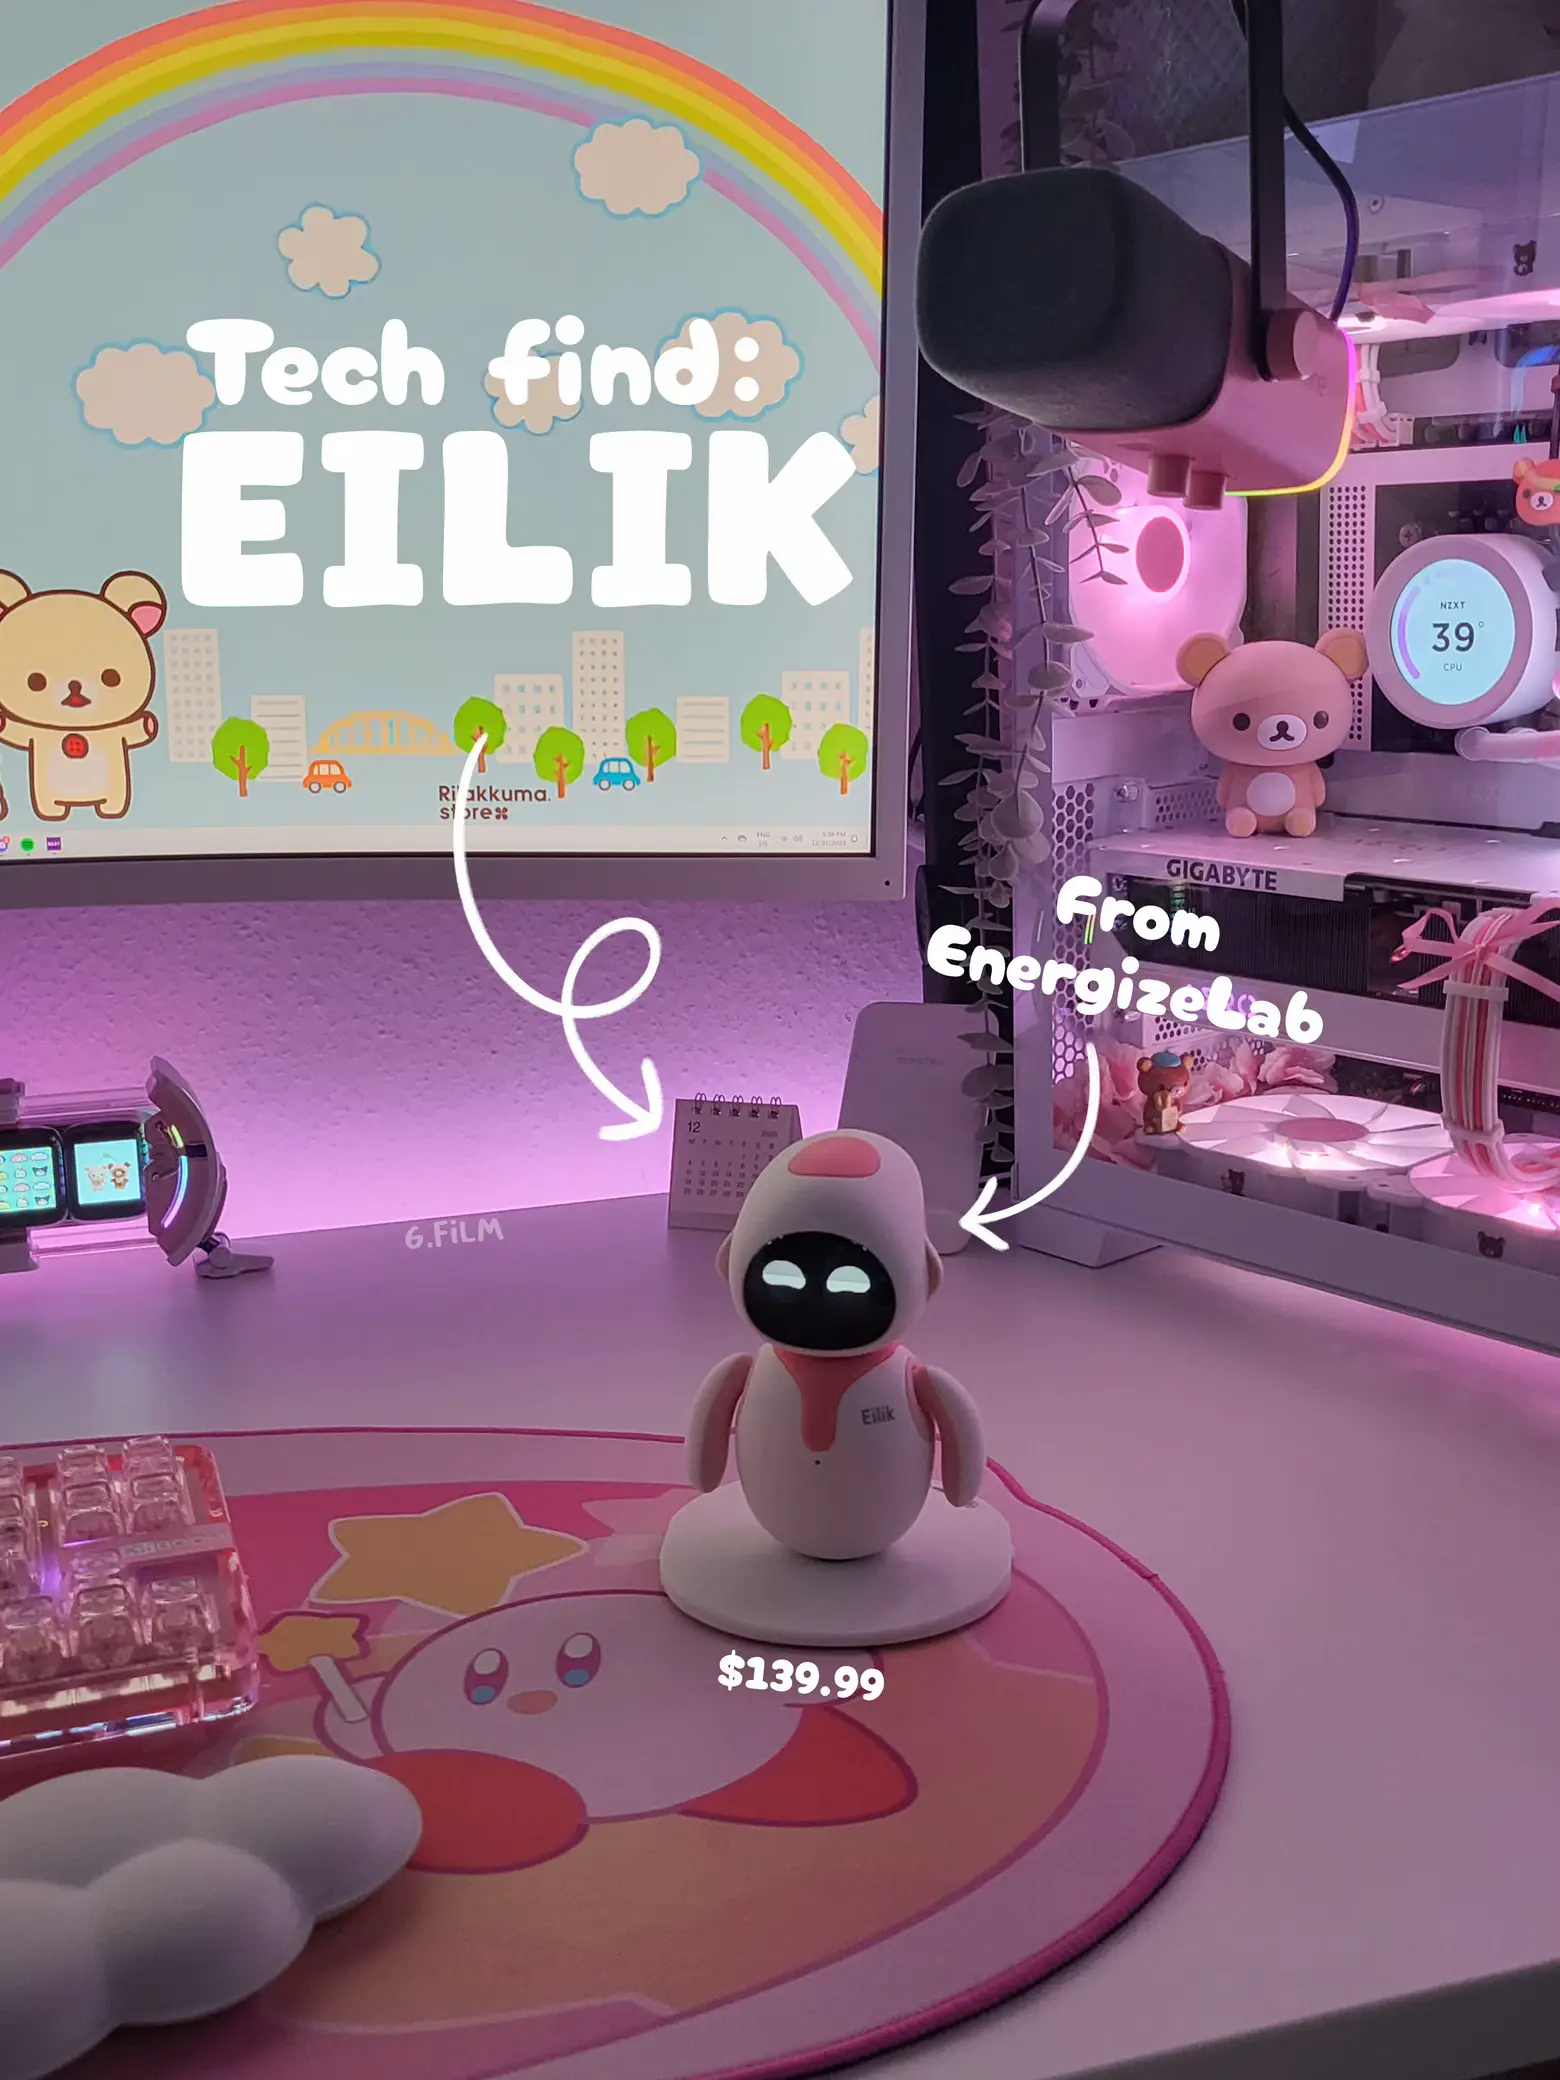 how to charge your eilik companion robot｜TikTok Search